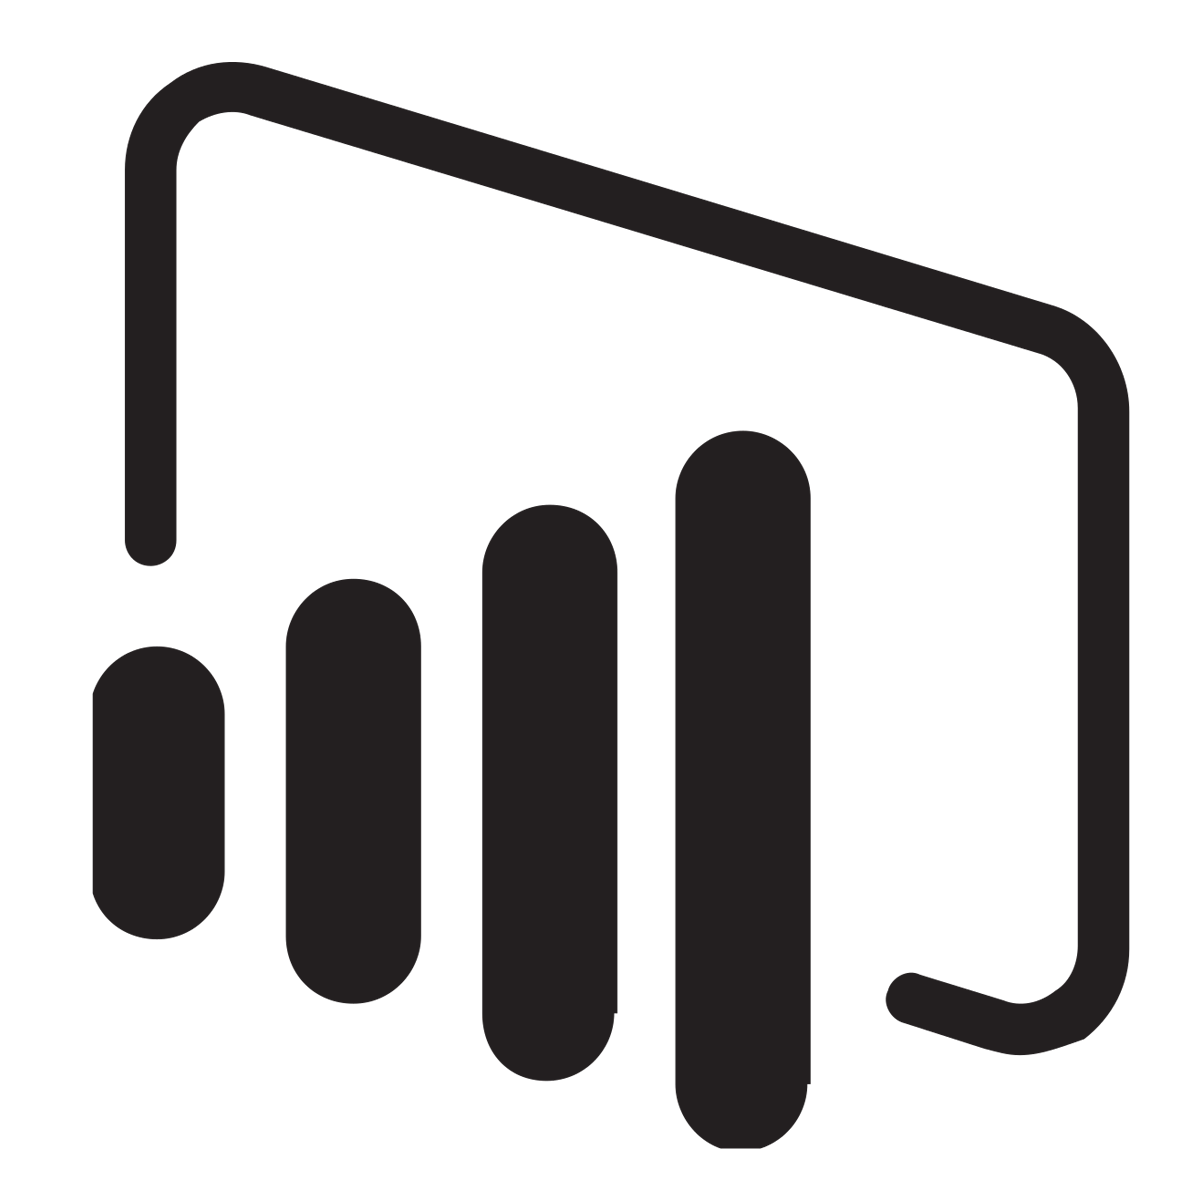 Power BI Logo - Microsoft Power BI: Honest Reviews, Comparisons, and Pricing | Capiche